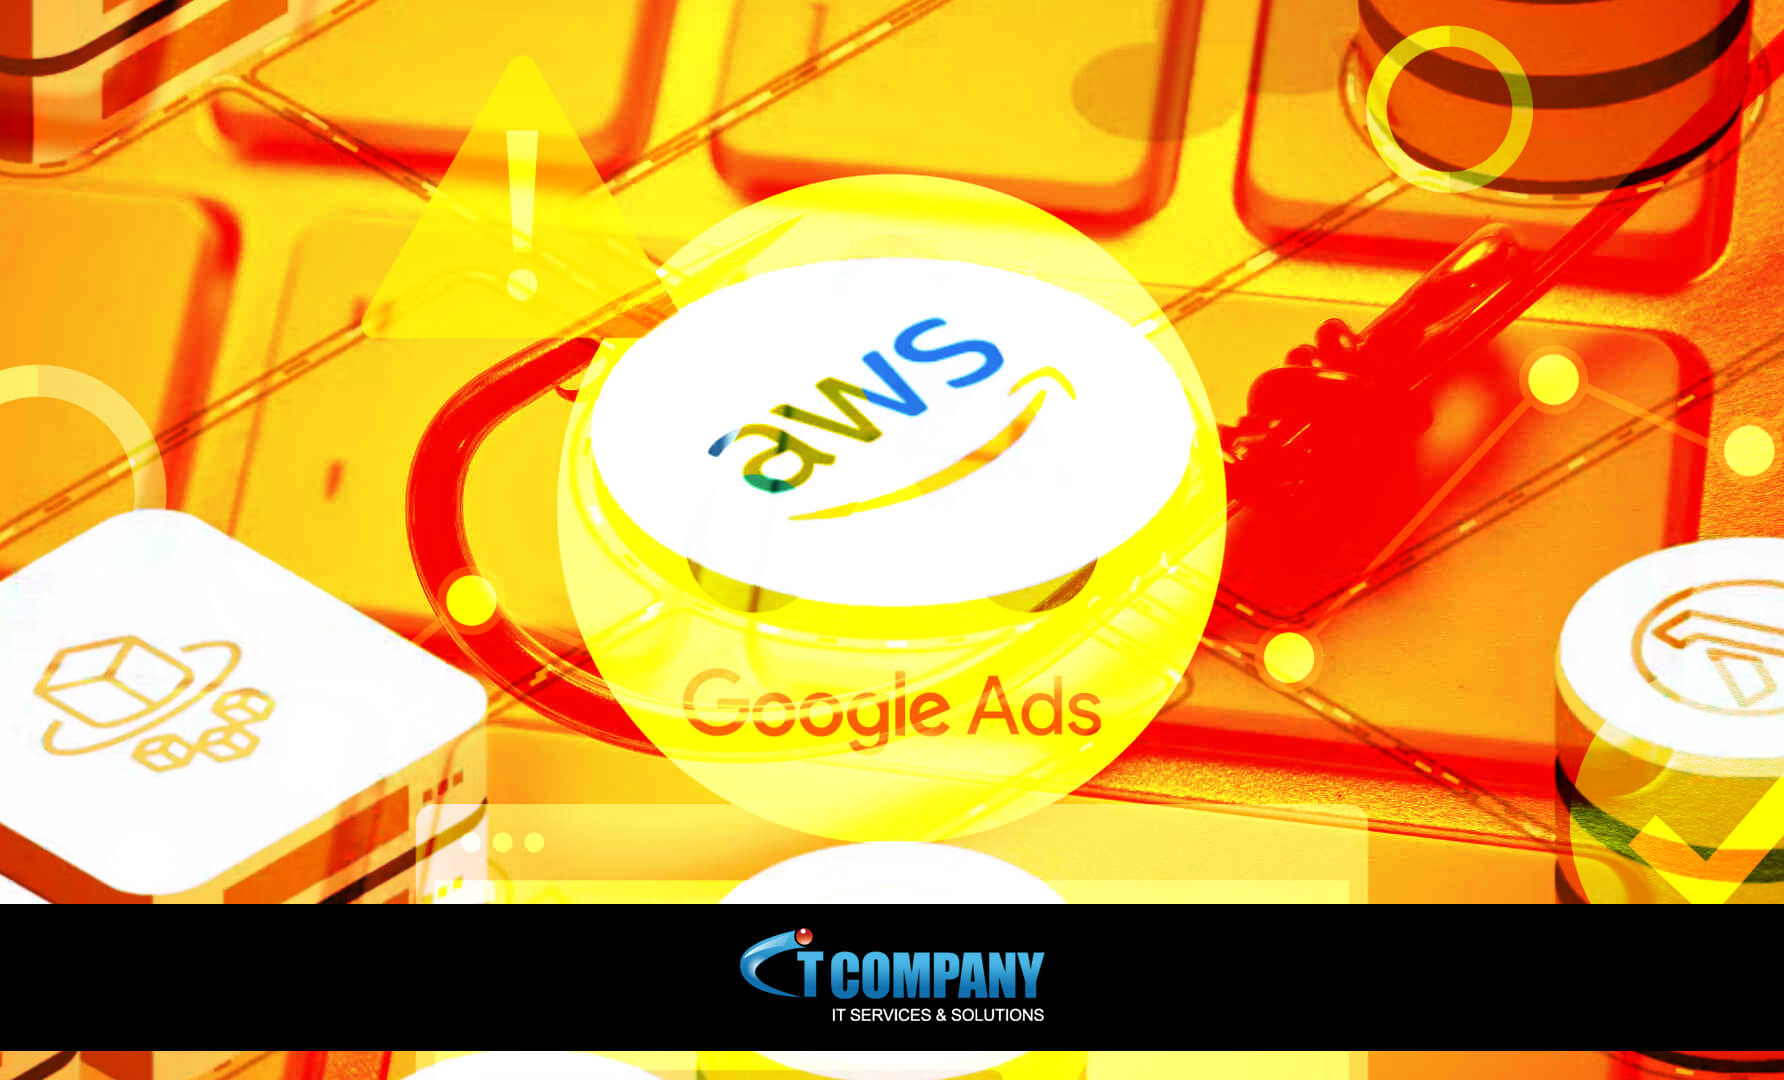 Phishing campaign abusing Google ads to target AWS logins